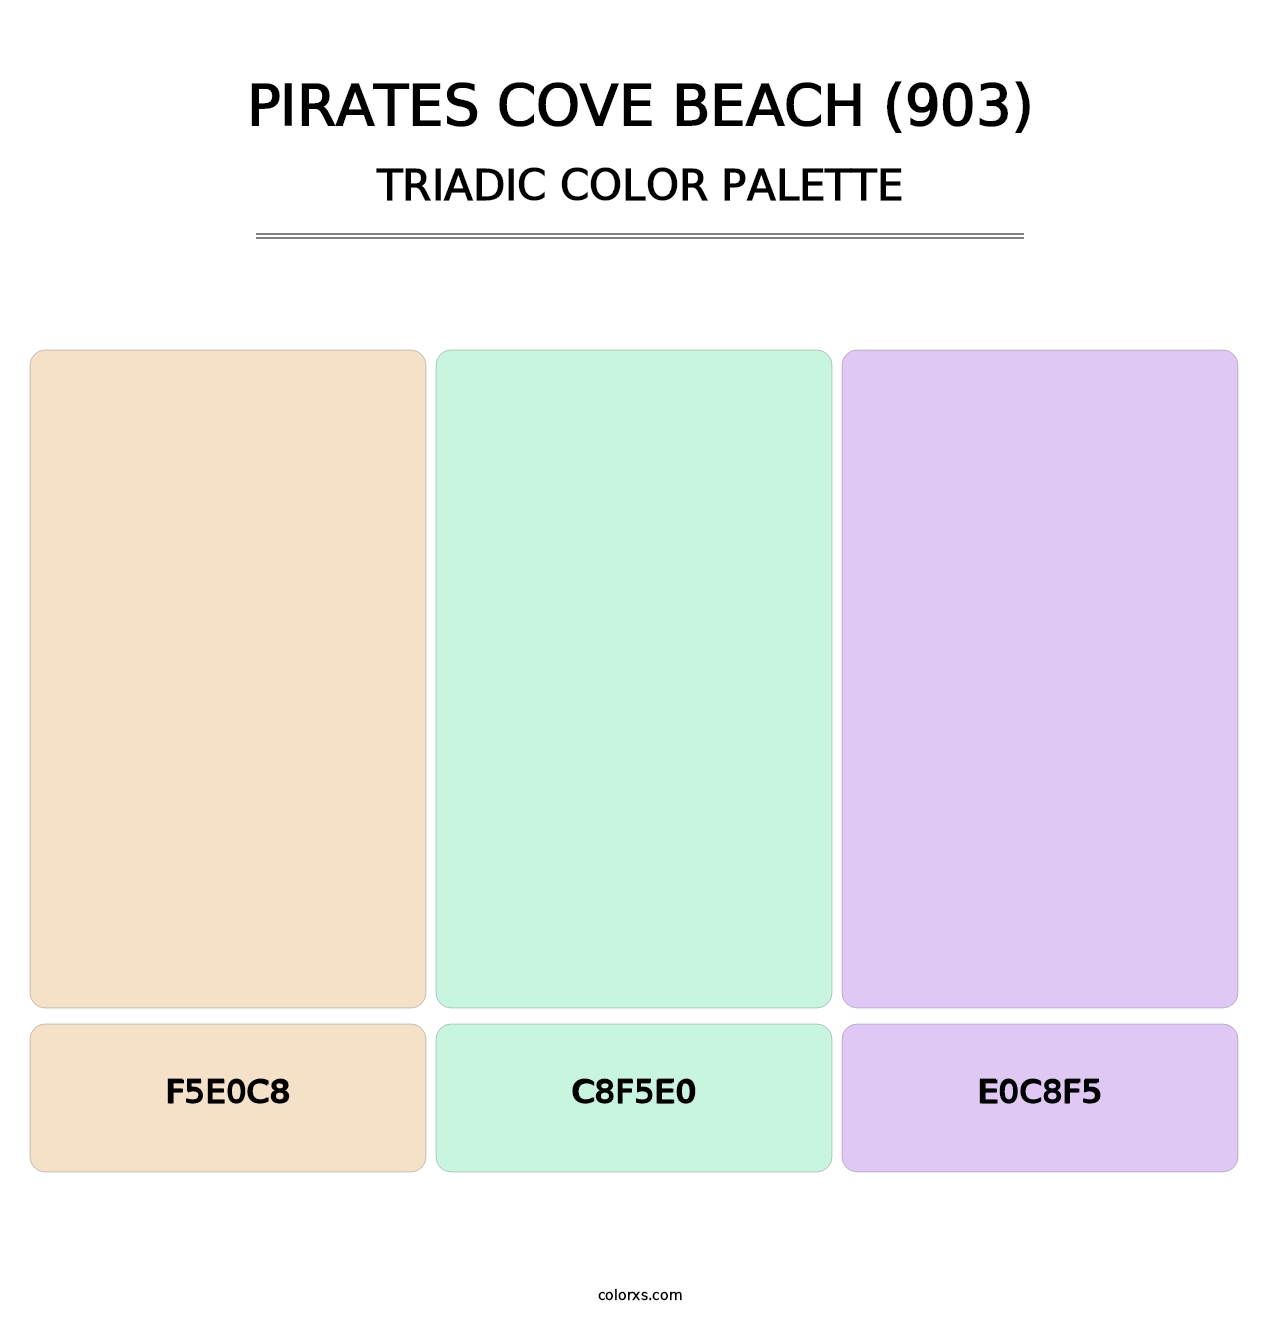 Pirates Cove Beach (903) - Triadic Color Palette